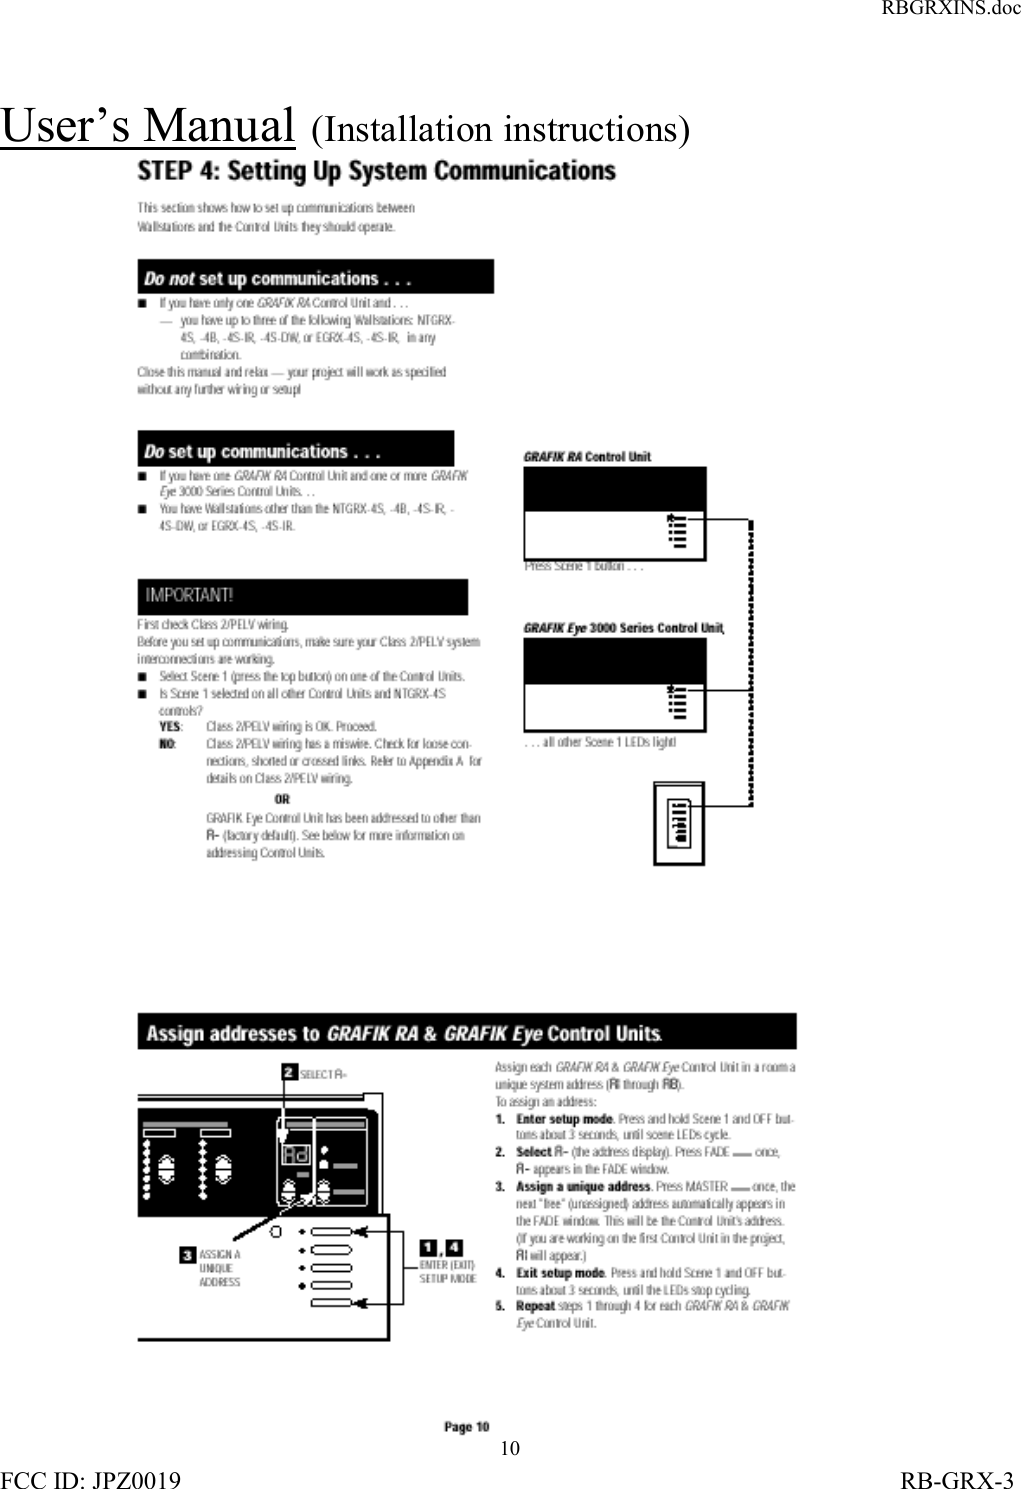 RBGRXINS.docFCC ID: JPZ0019                                                                                                                   RB-GRX-310User’s Manual  (Installation instructions)